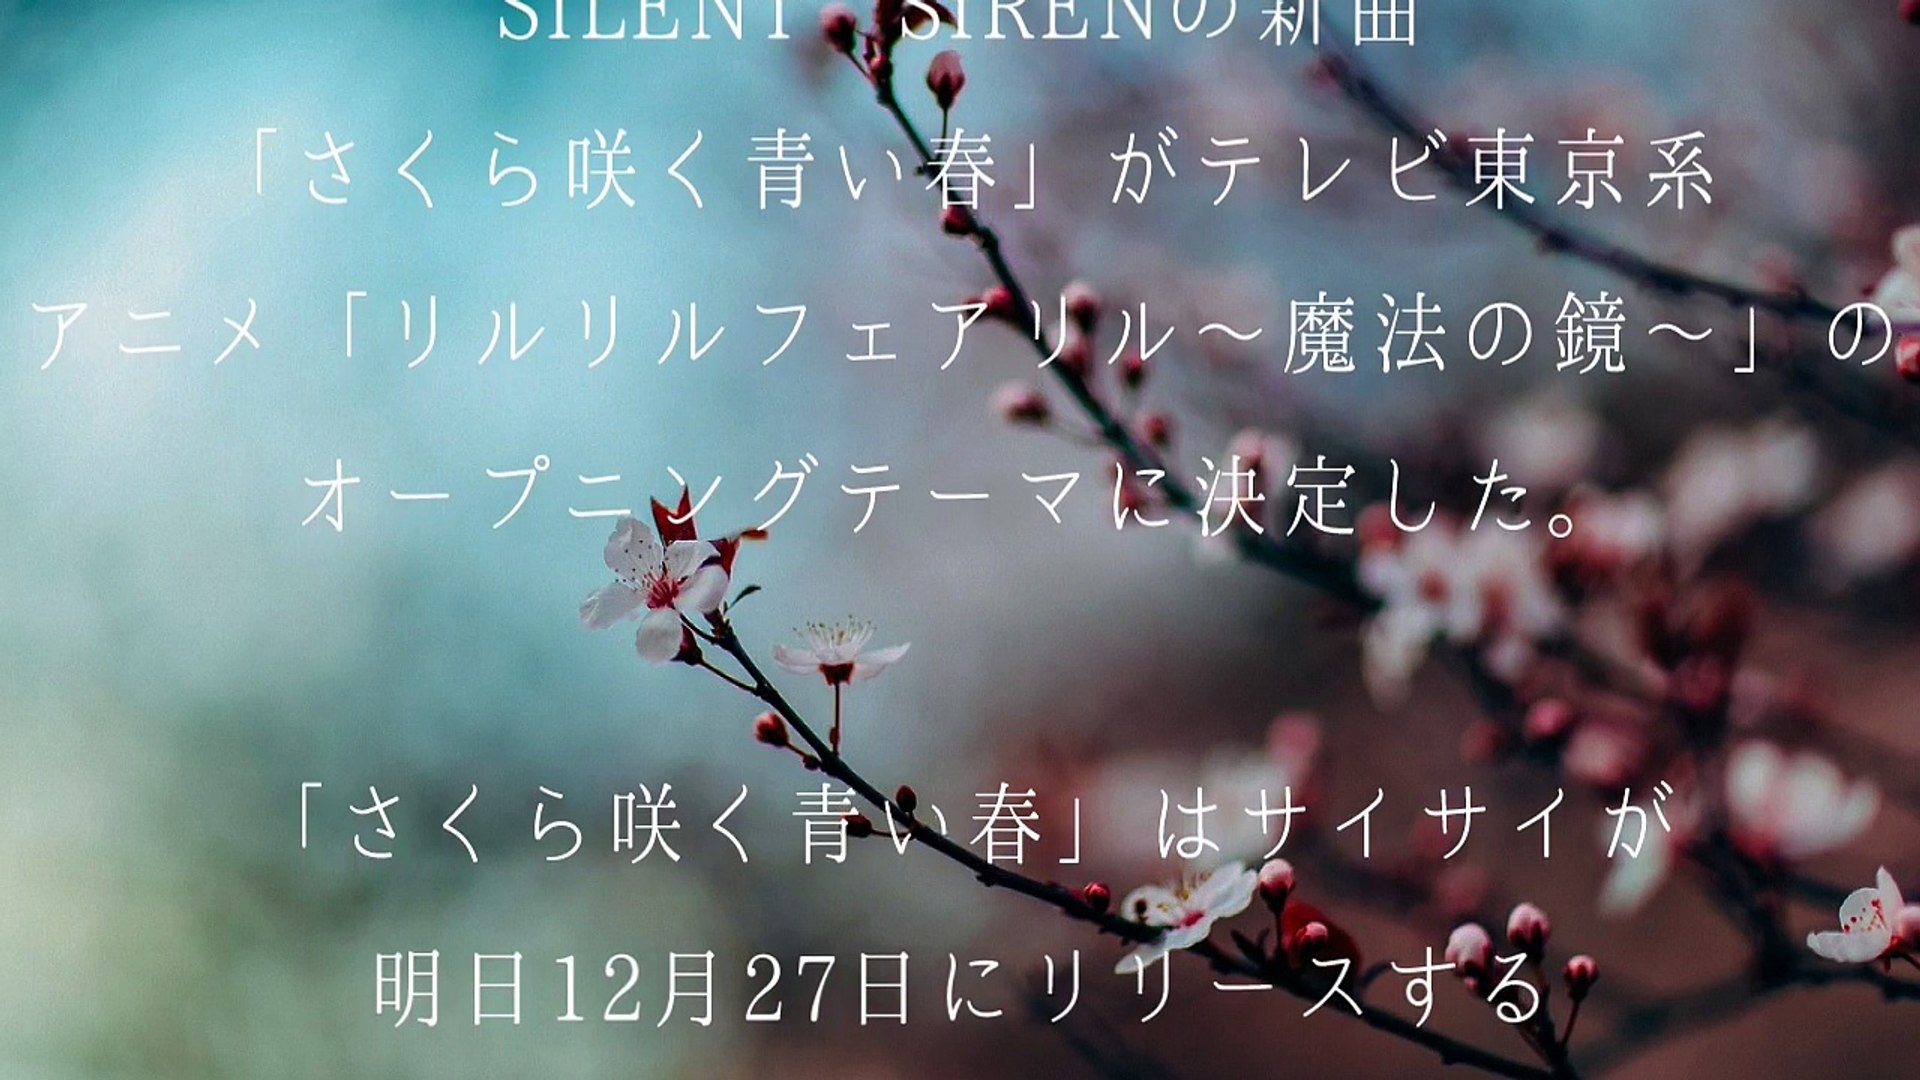 Silent Siren さくら咲く青い春 アニメ リルリルフェアリル 魔法の鏡 Op Dailymotion Video